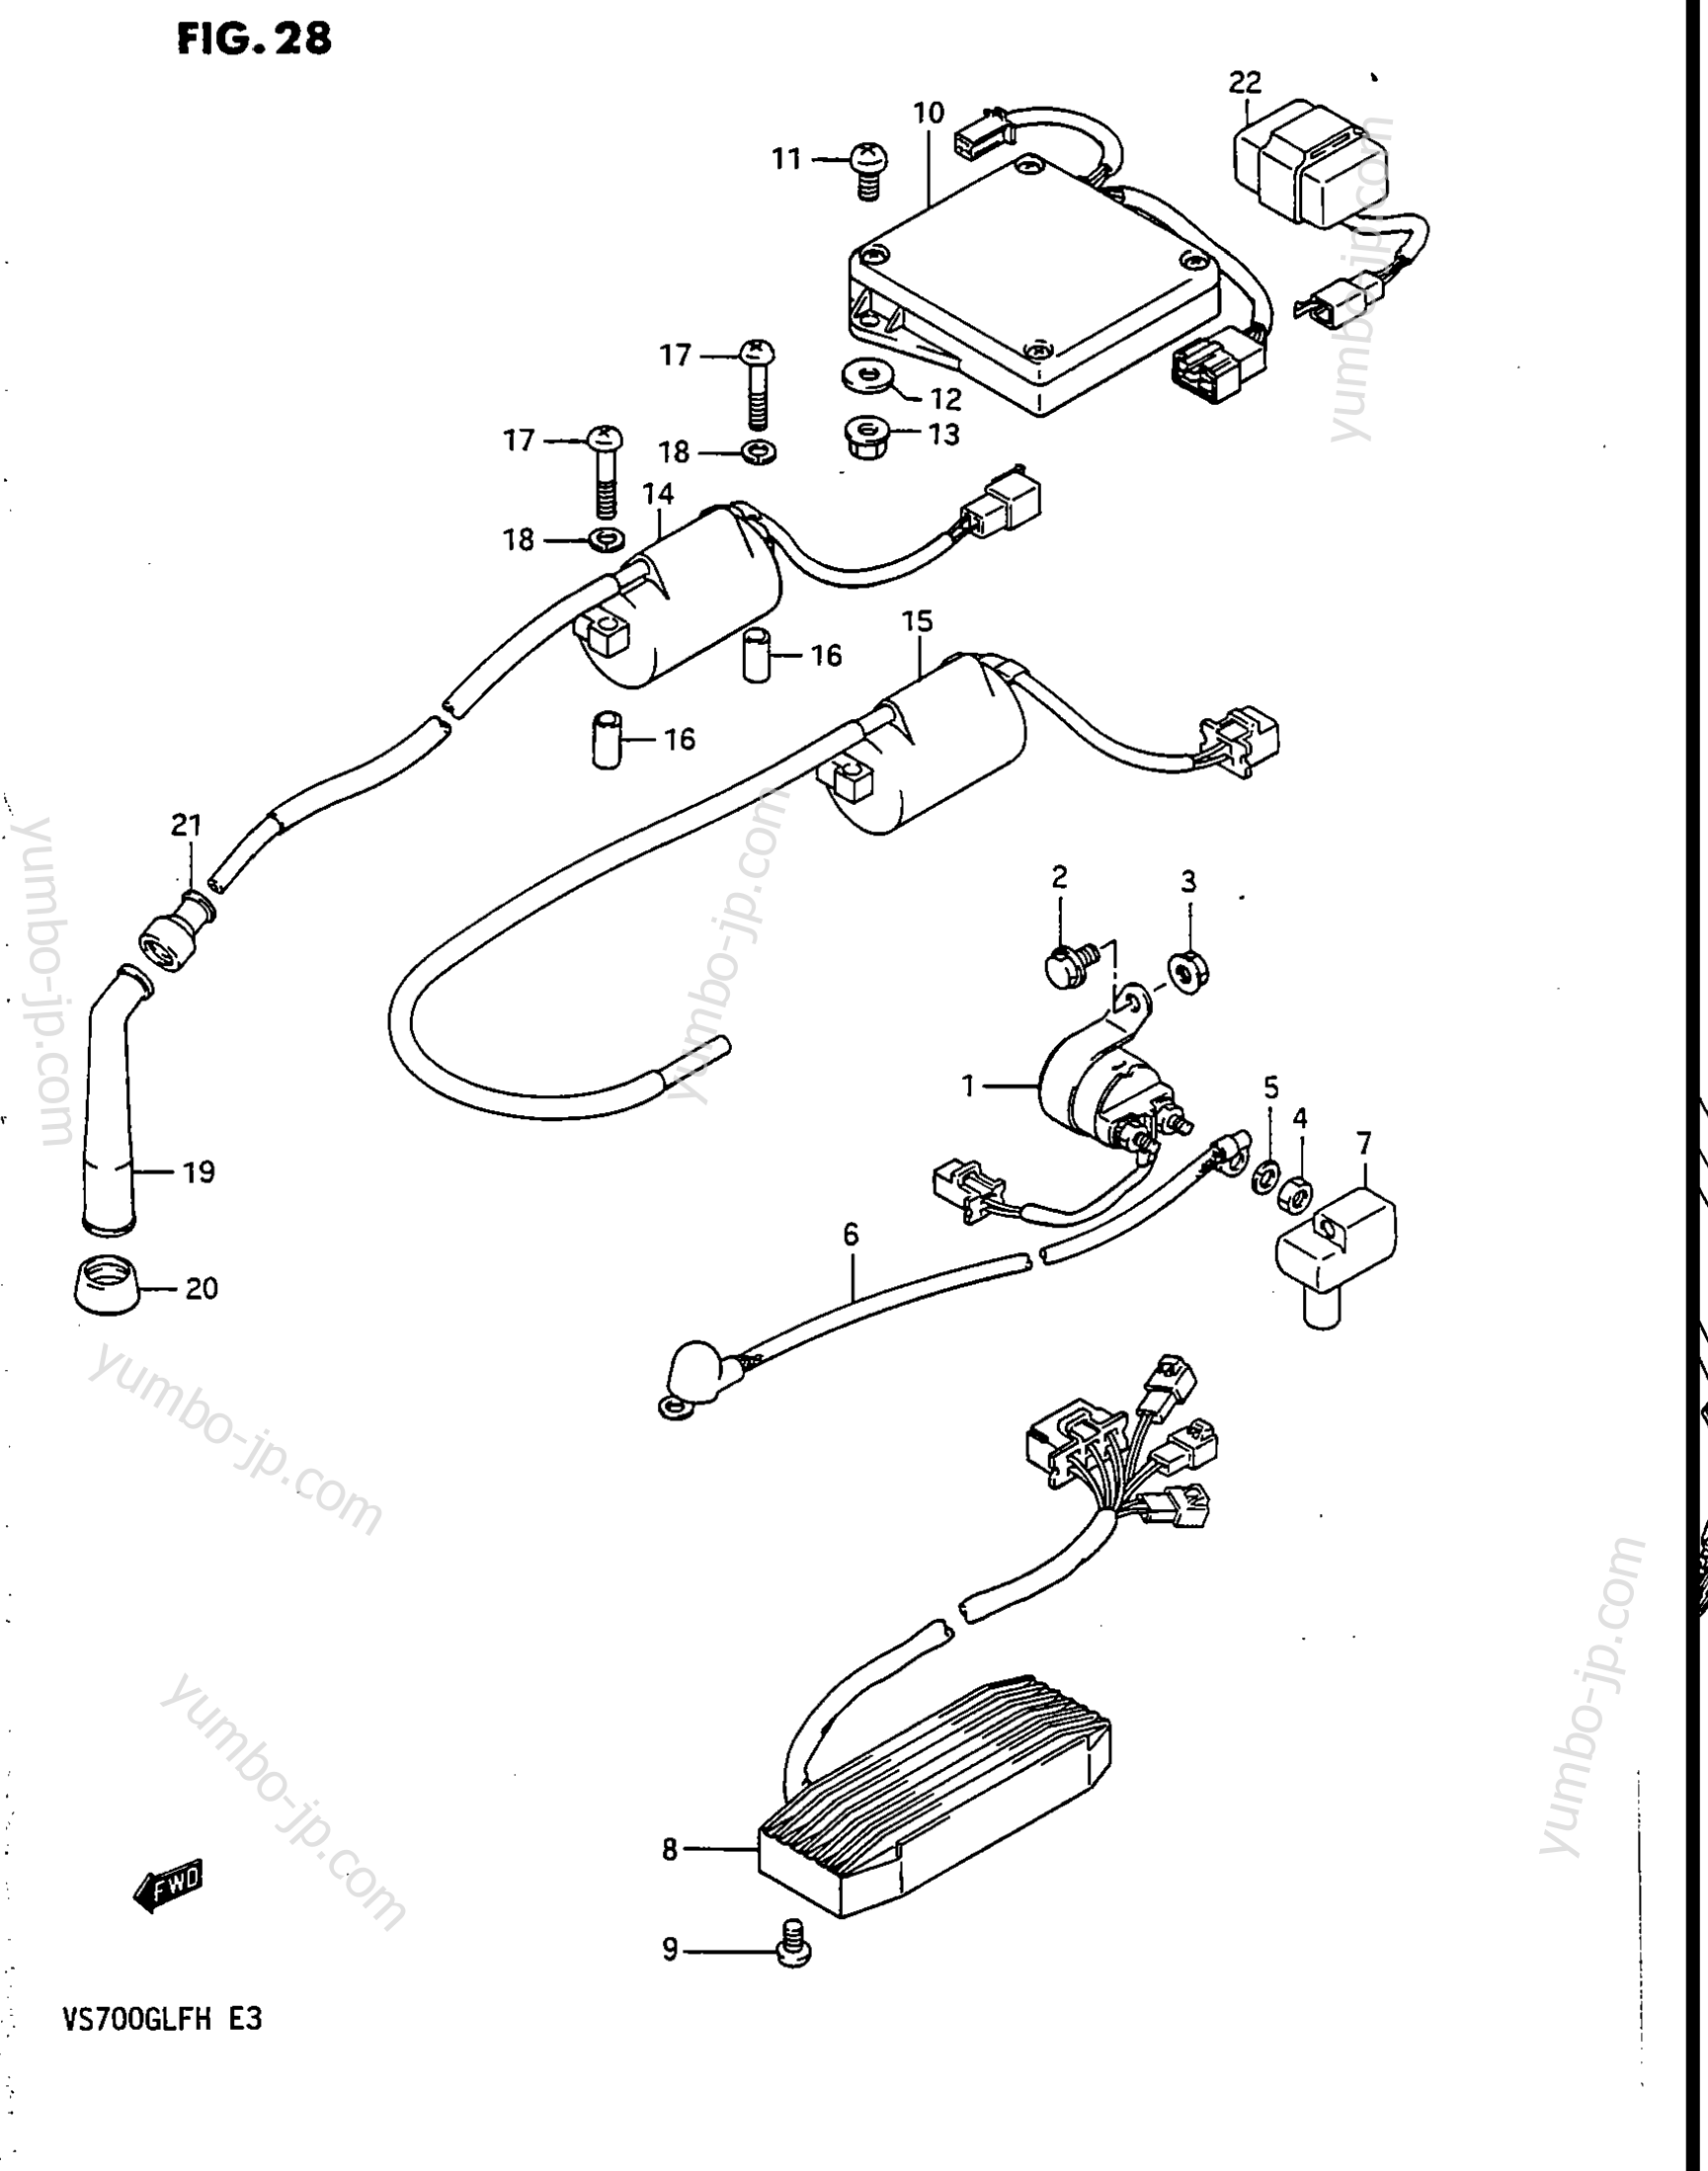 Electrical for motorcycles SUZUKI Intruder (VS700GLF) 1986 year